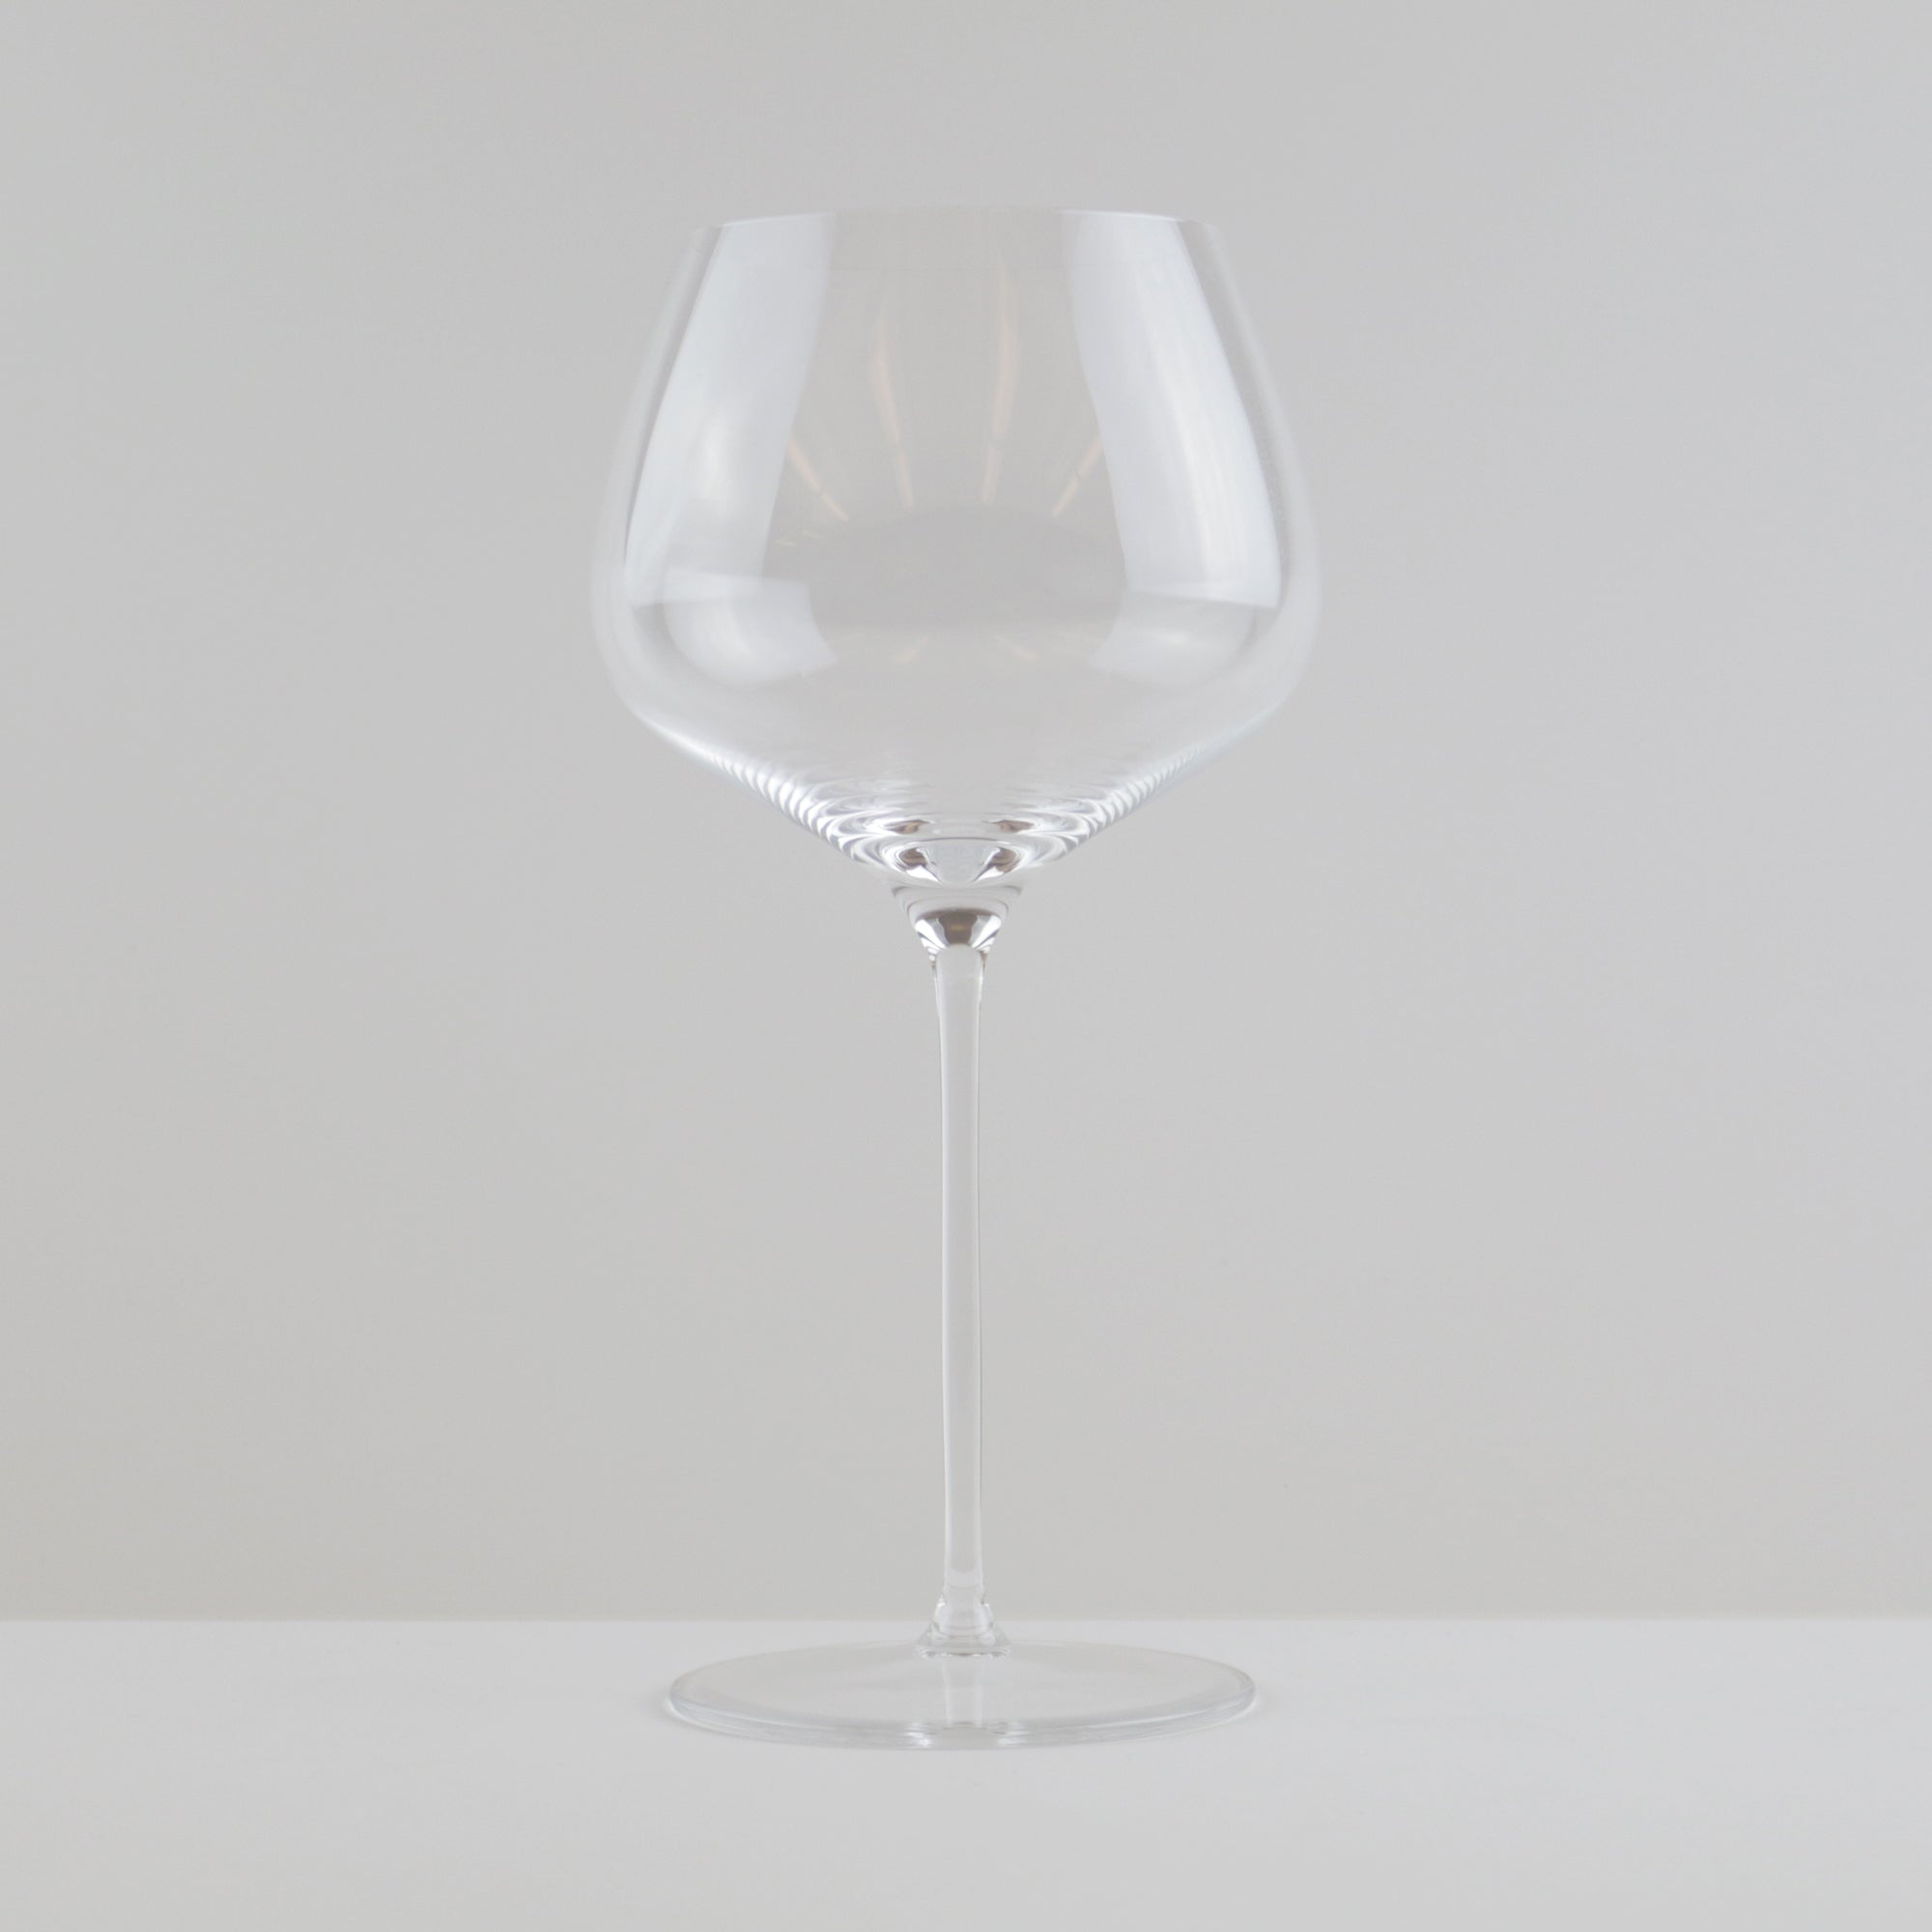 Spiegelau Willsberger 25.6 oz Burgundy Glass (Set of 4)